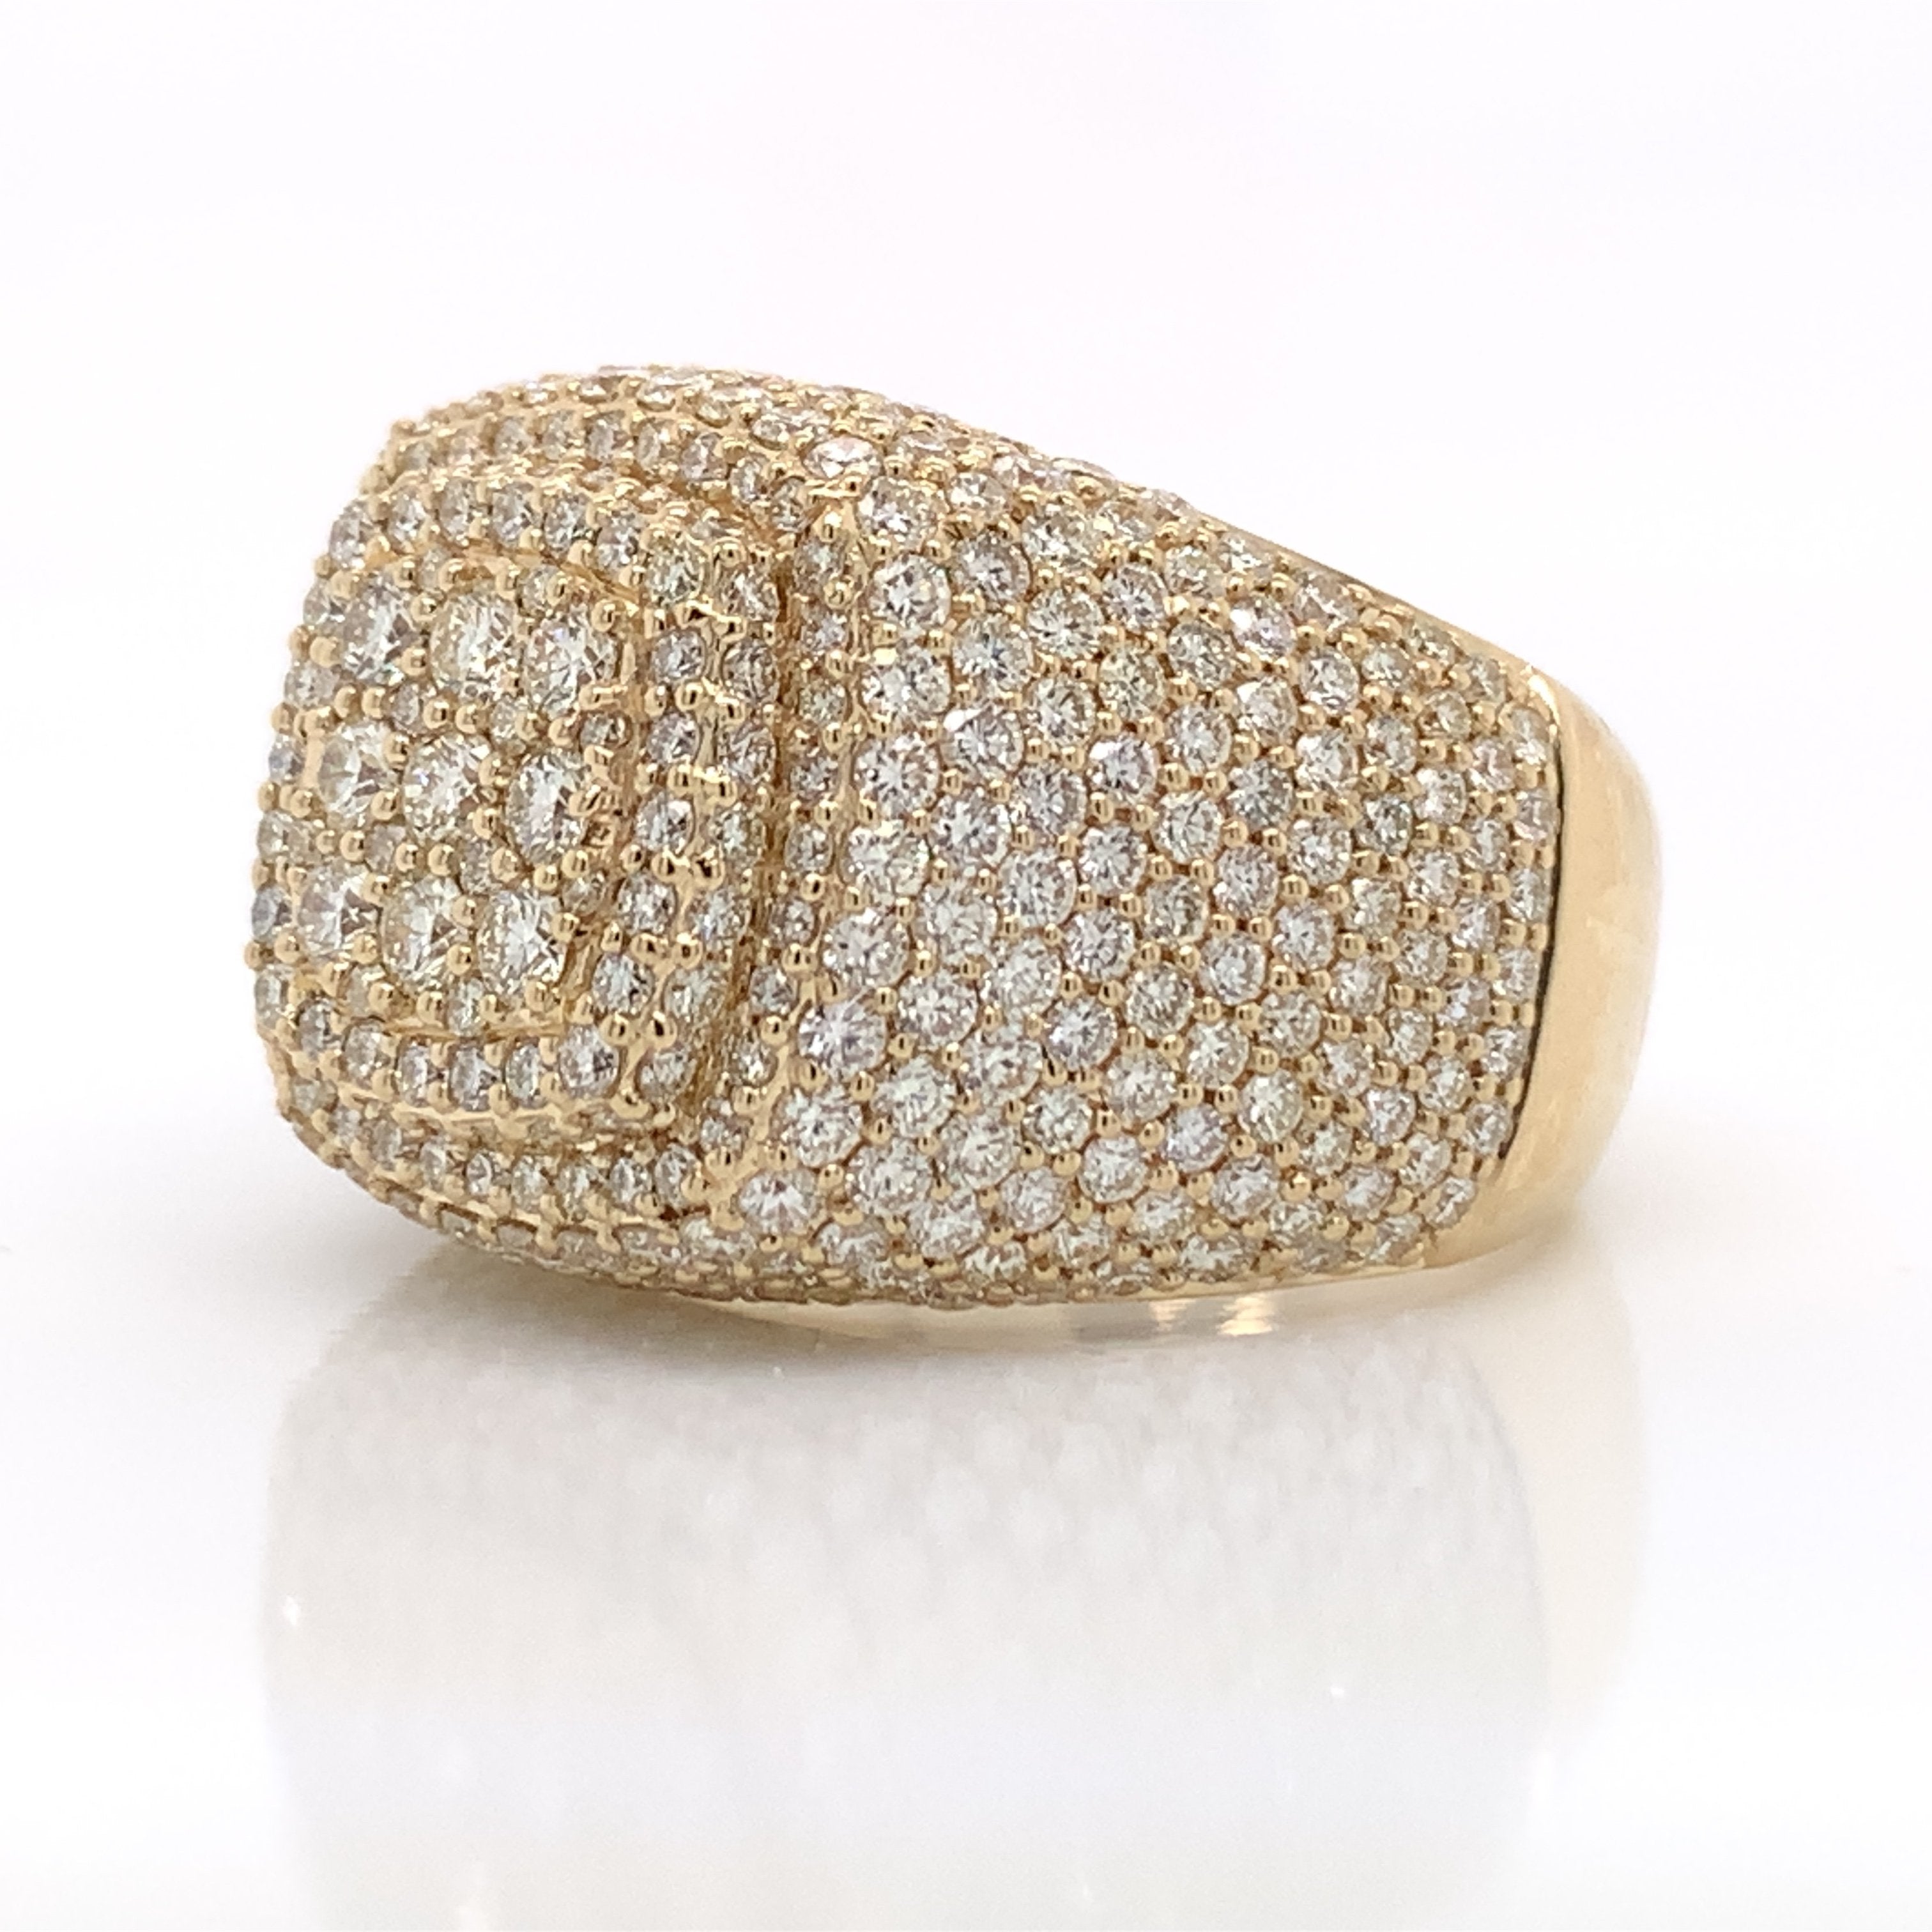 Copy of 2.50 CT. Diamond Ring 10KT Gold - White Carat Diamonds 